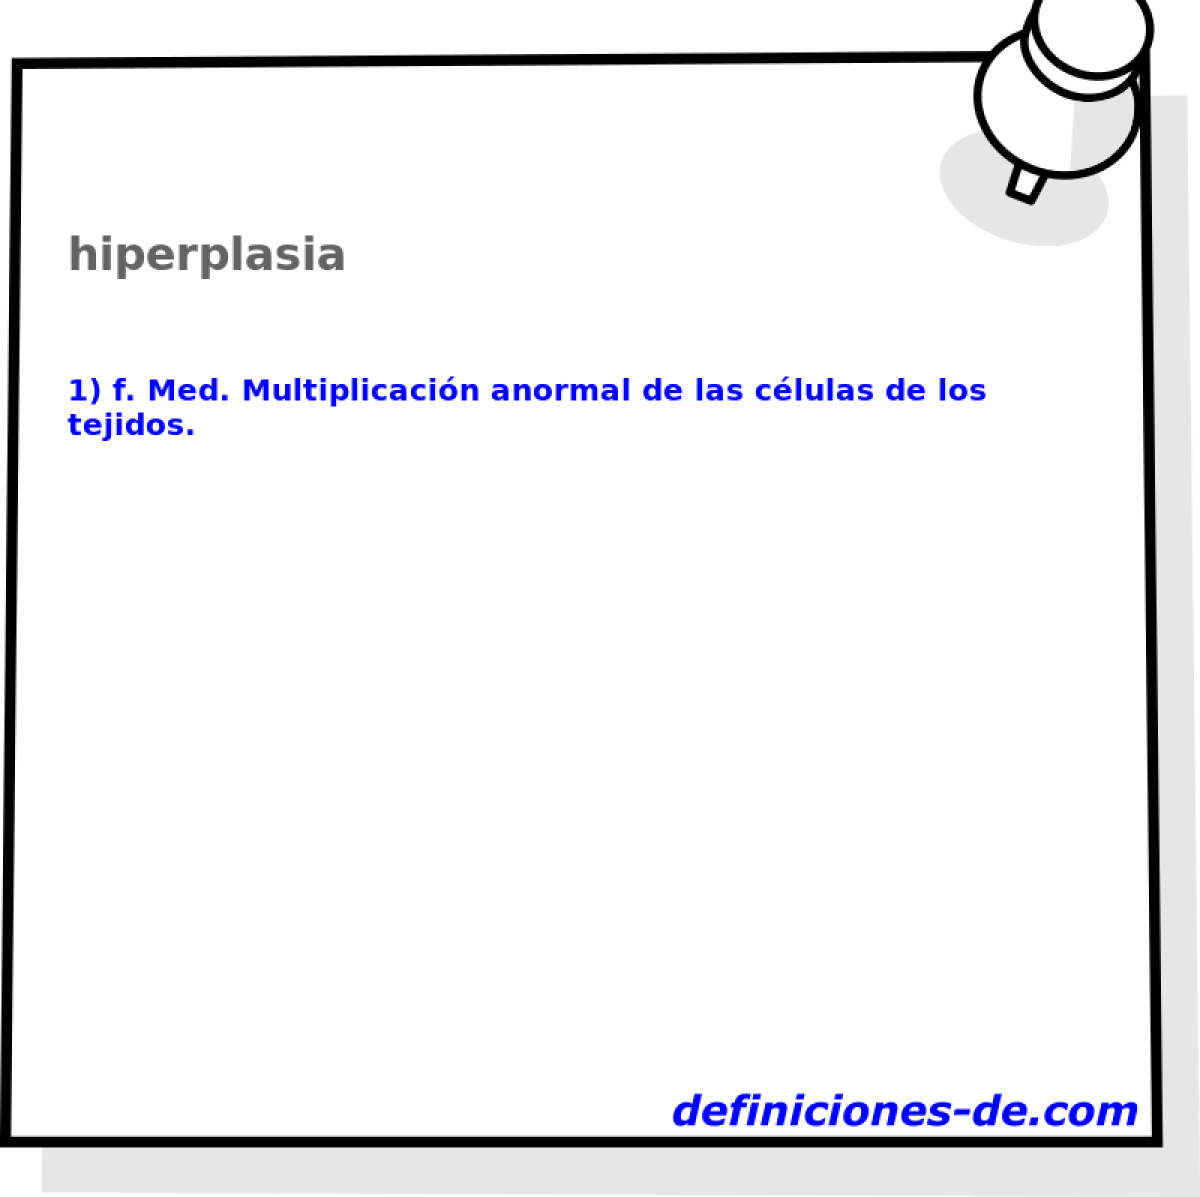 hiperplasia 